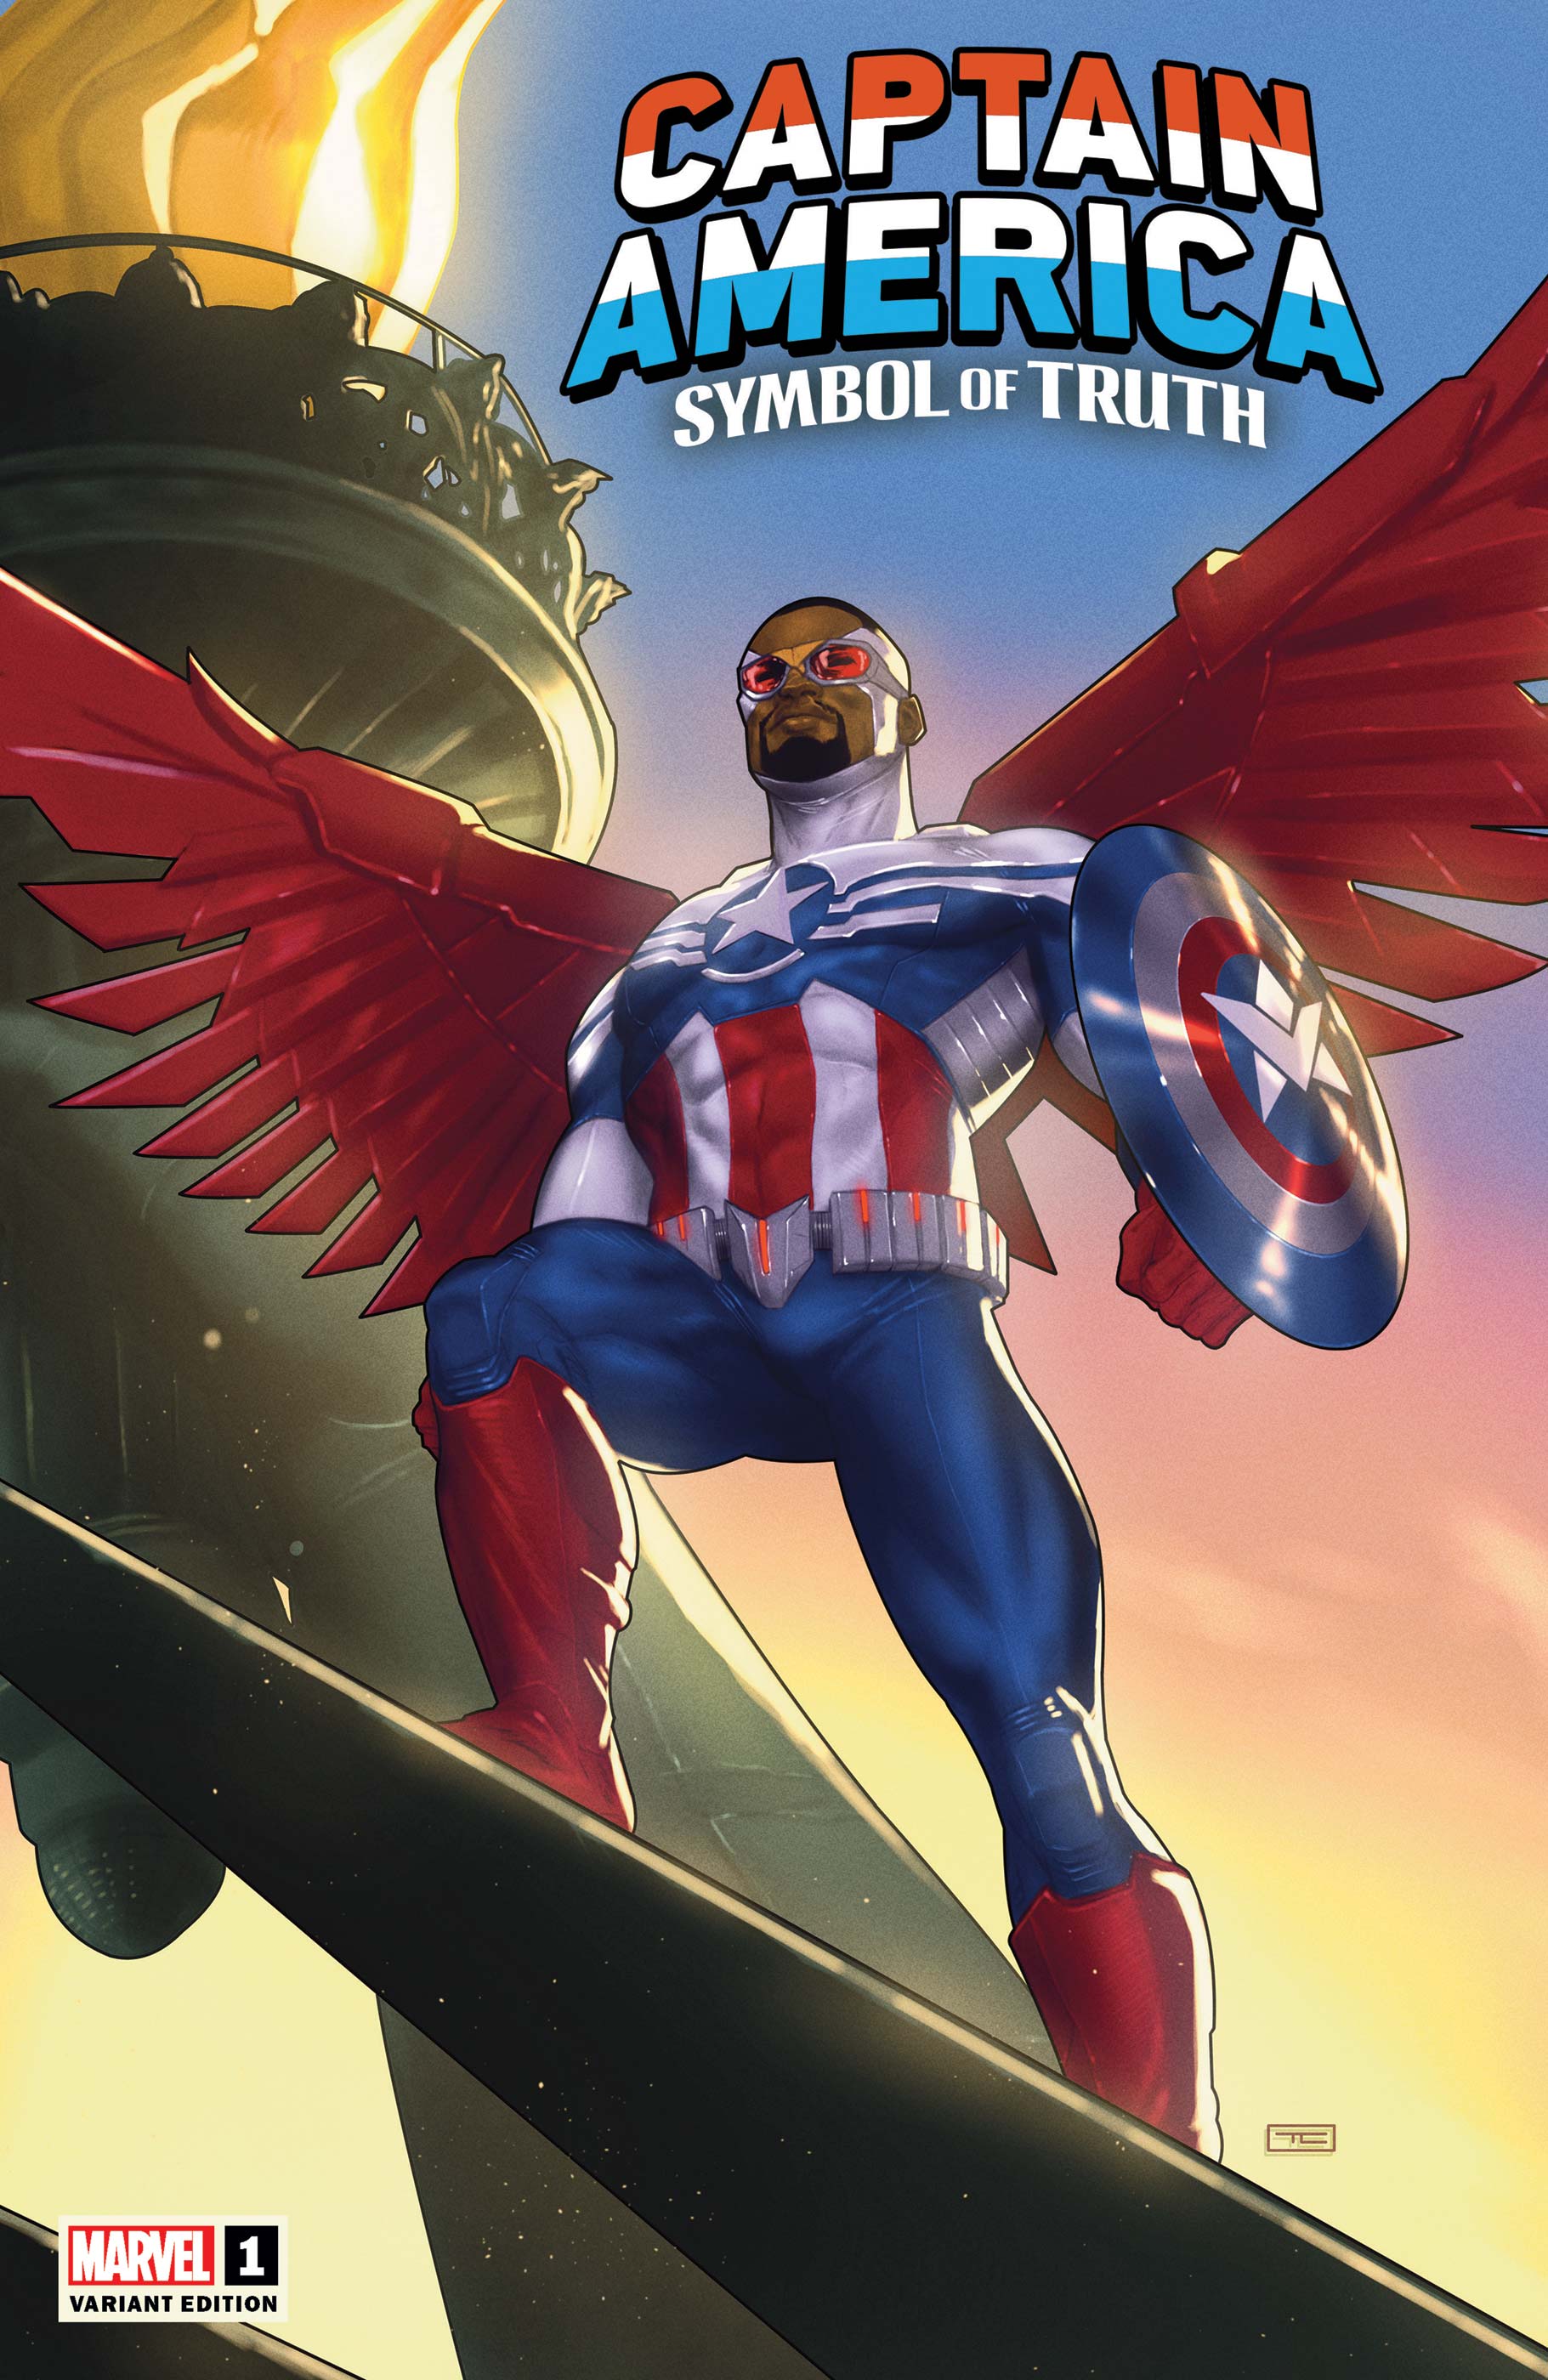 Captain America: Symbol of Truth (2022) #1 (Variant)